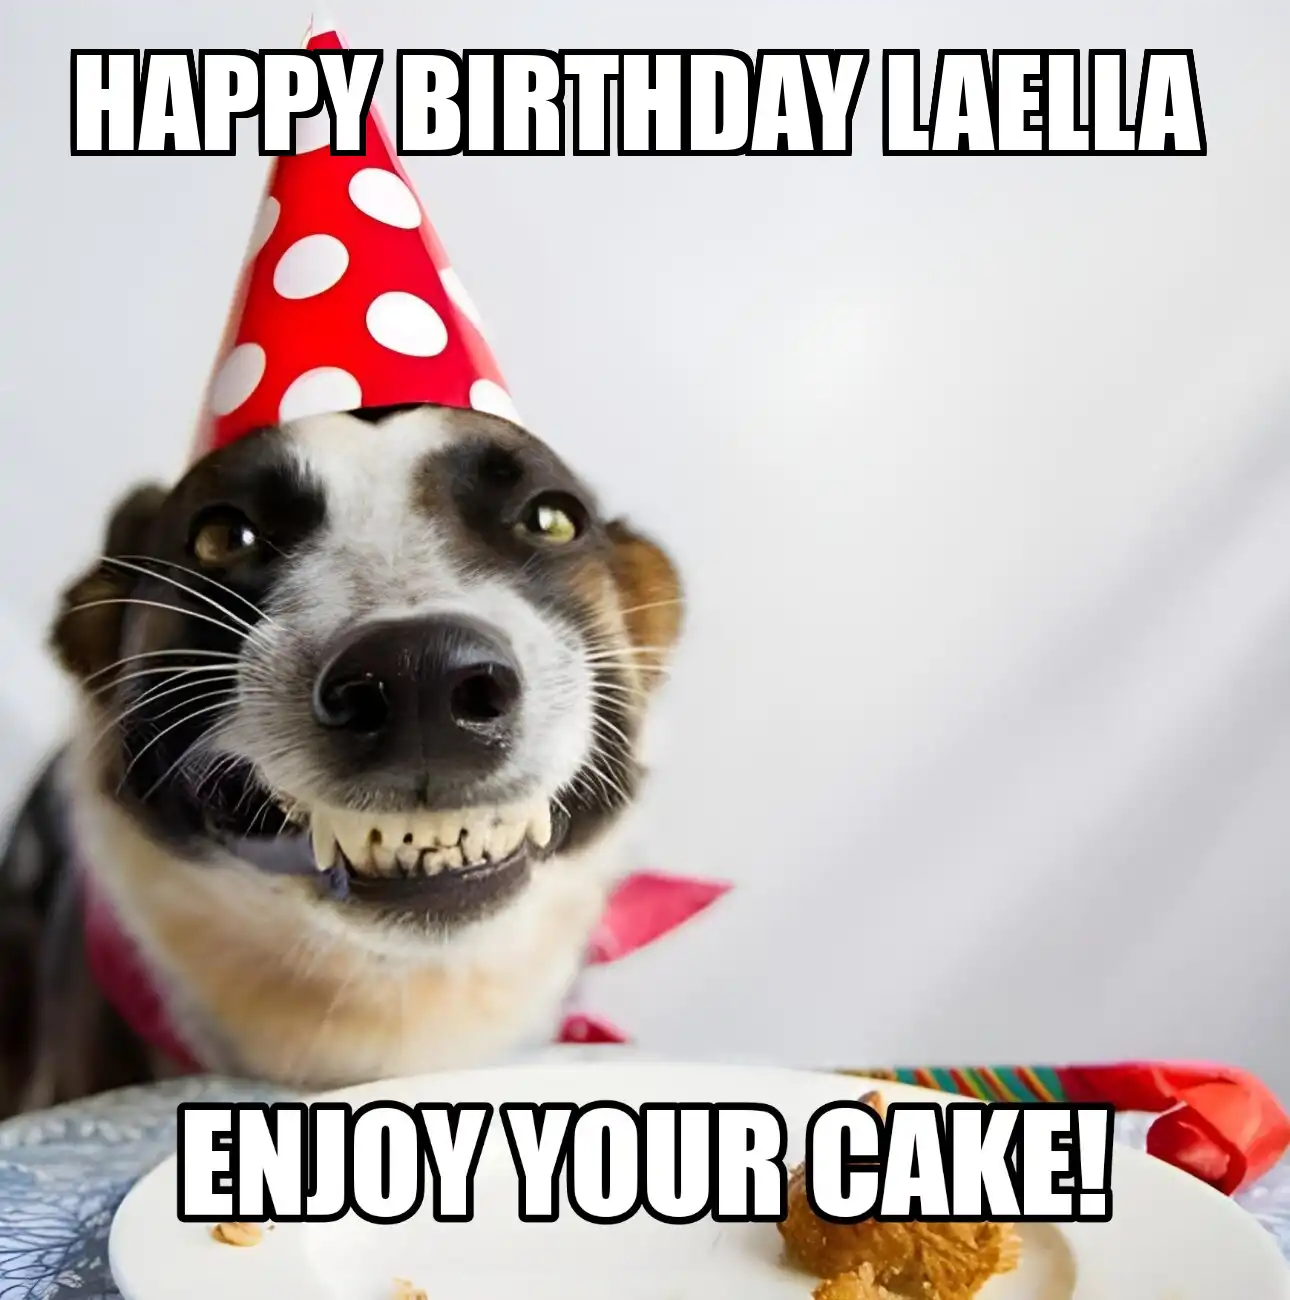 Happy Birthday Laella Enjoy Your Cake Dog Meme